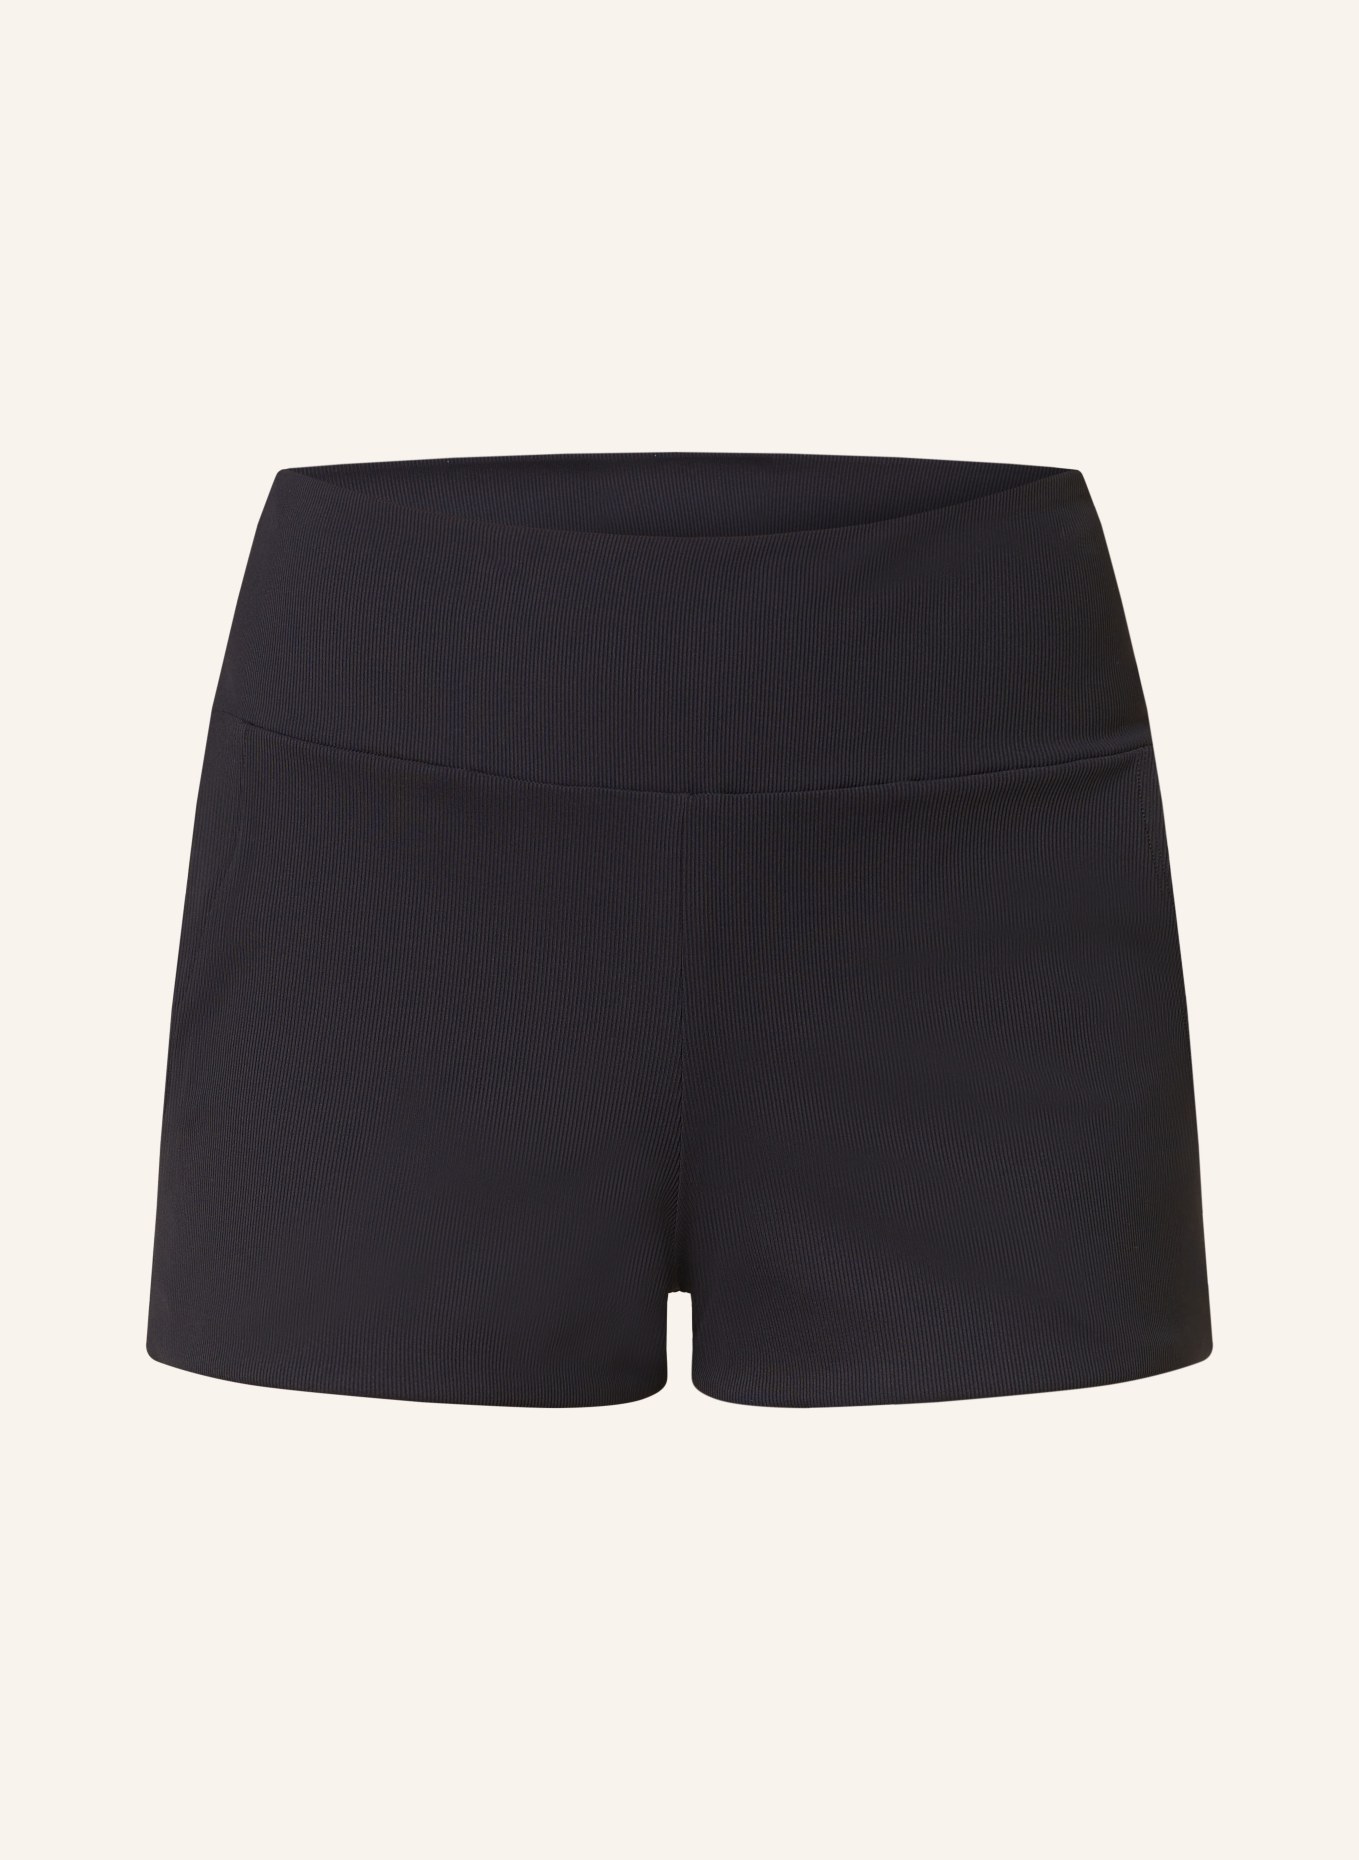 MYMARINI Panty-Bikini-Hose mit UV-Schutz 50+, Farbe: SCHWARZ (Bild 1)